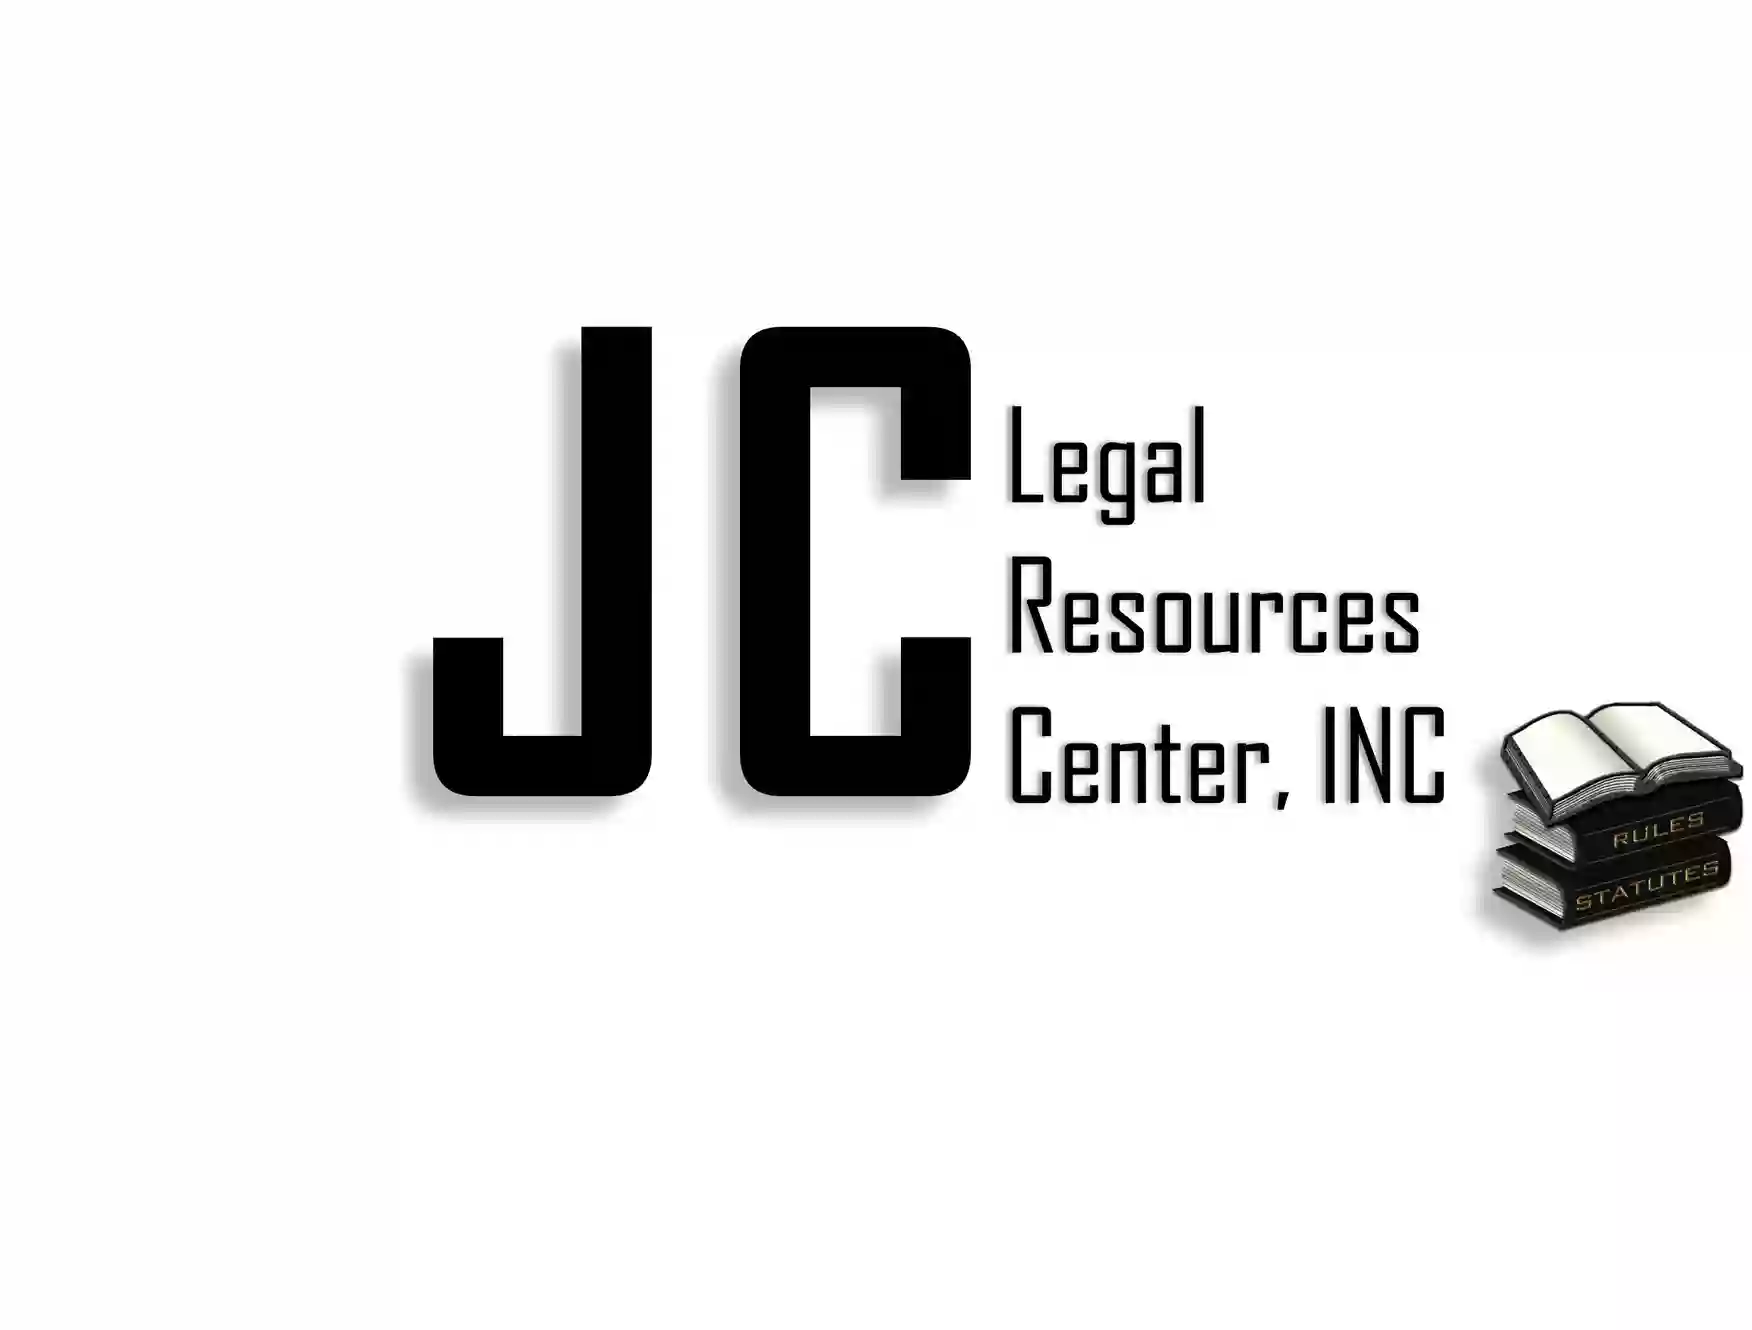 JC Legal Resources Center